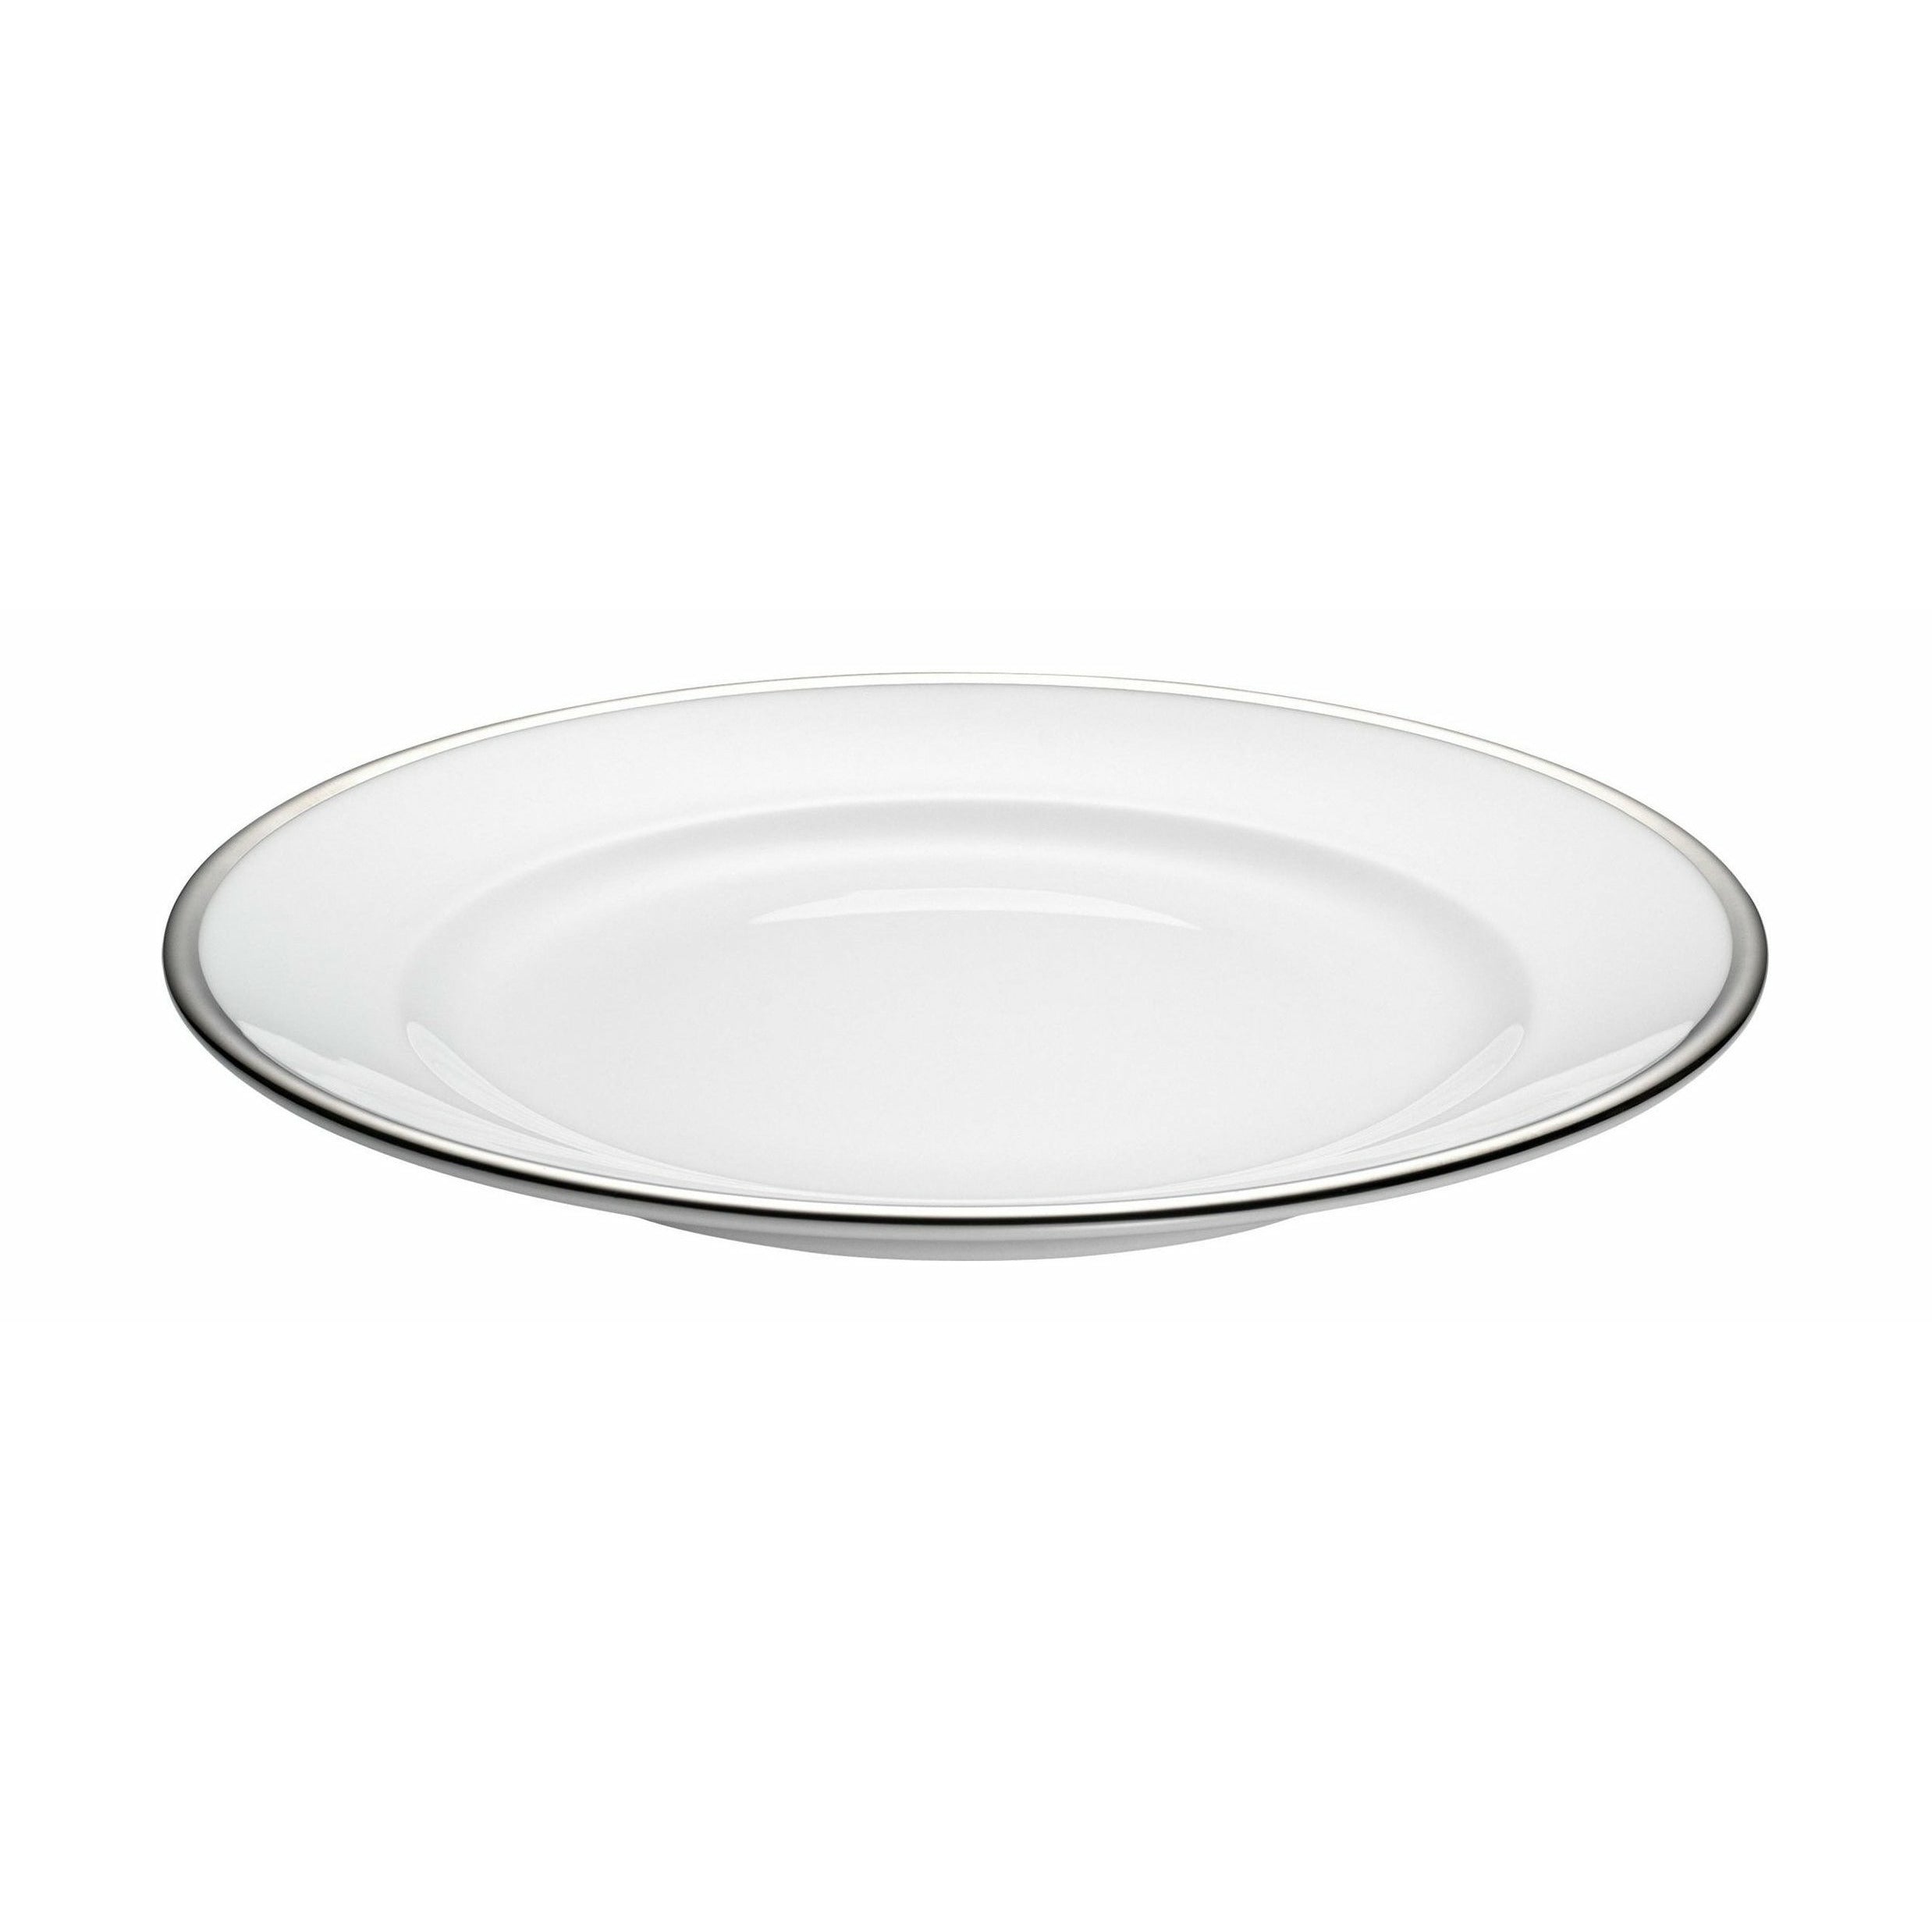 Pilvuyt Bistro Plate Ø 21 cm, biały/srebrny